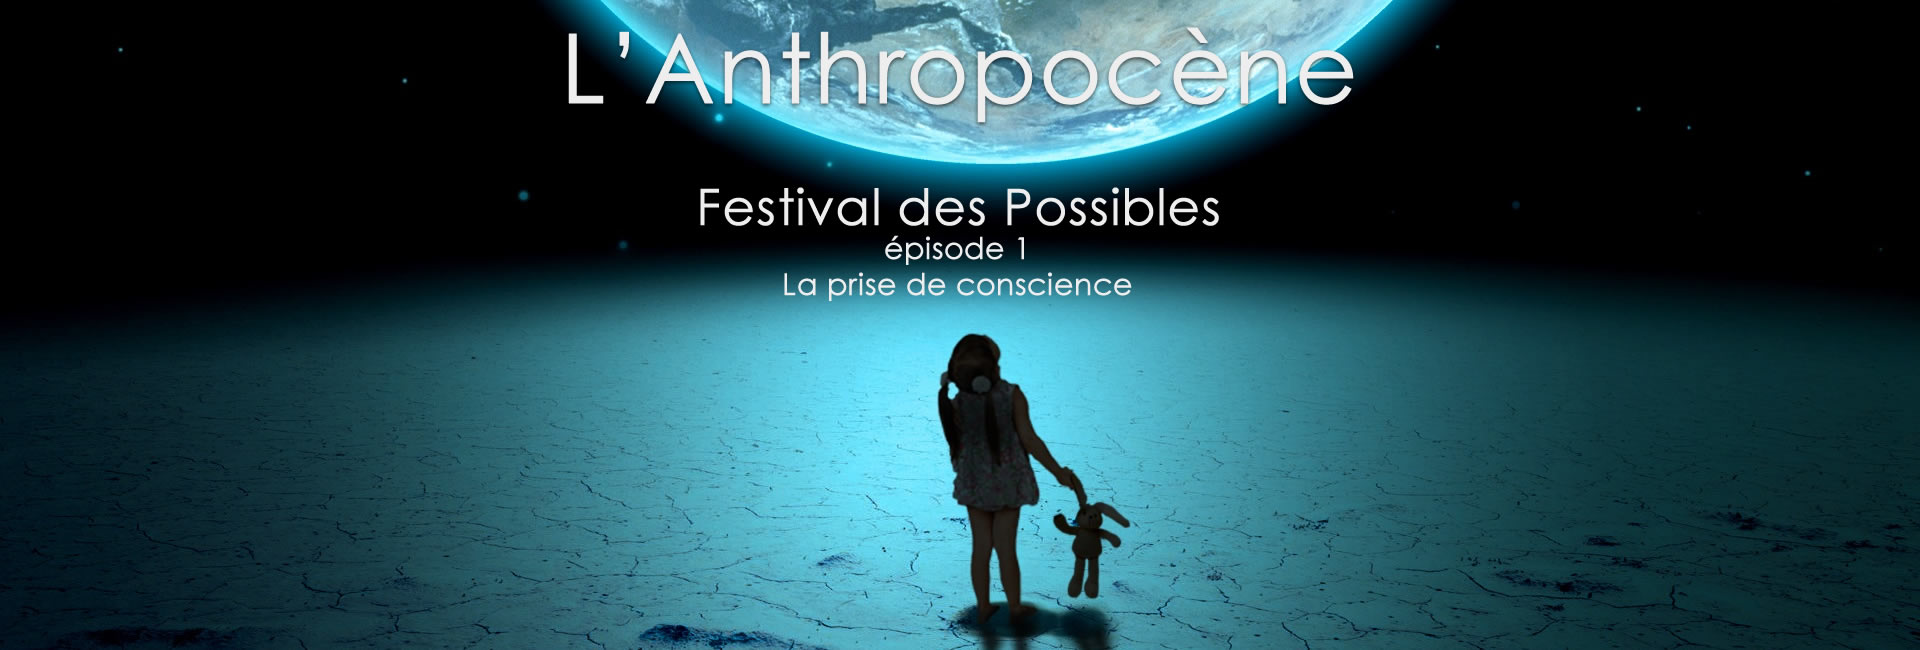 Anthropocene Anthropocene festival possible